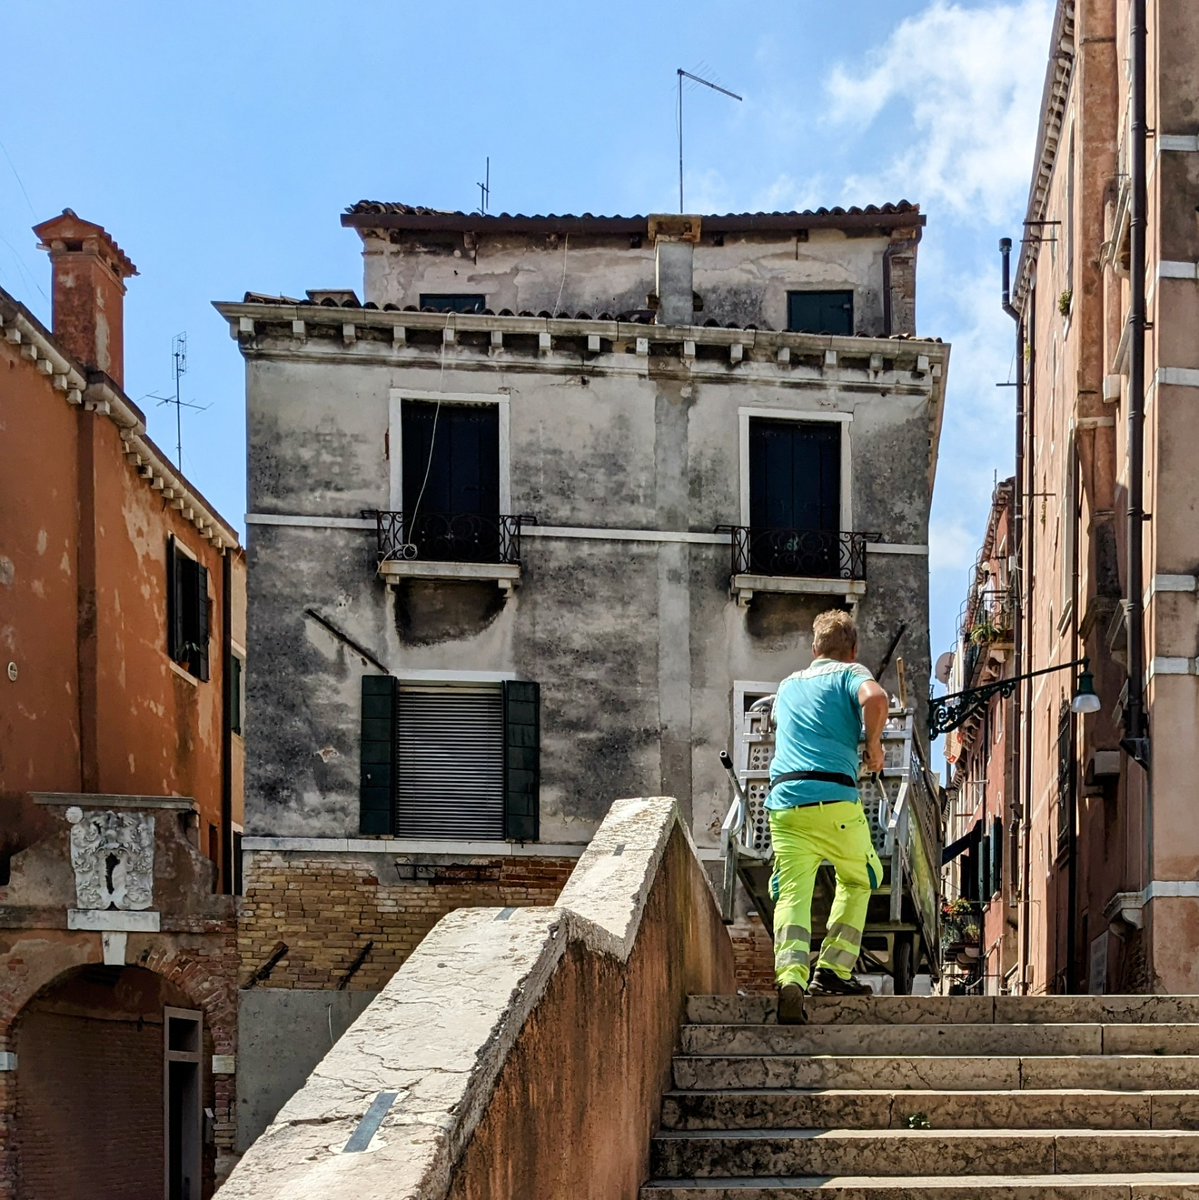 Raccolta in salita #venezia #venice #veneziagram #veneziaunica #igersvenezia #veneziadavivere #travelphotography #venise #picoftheday #architecture